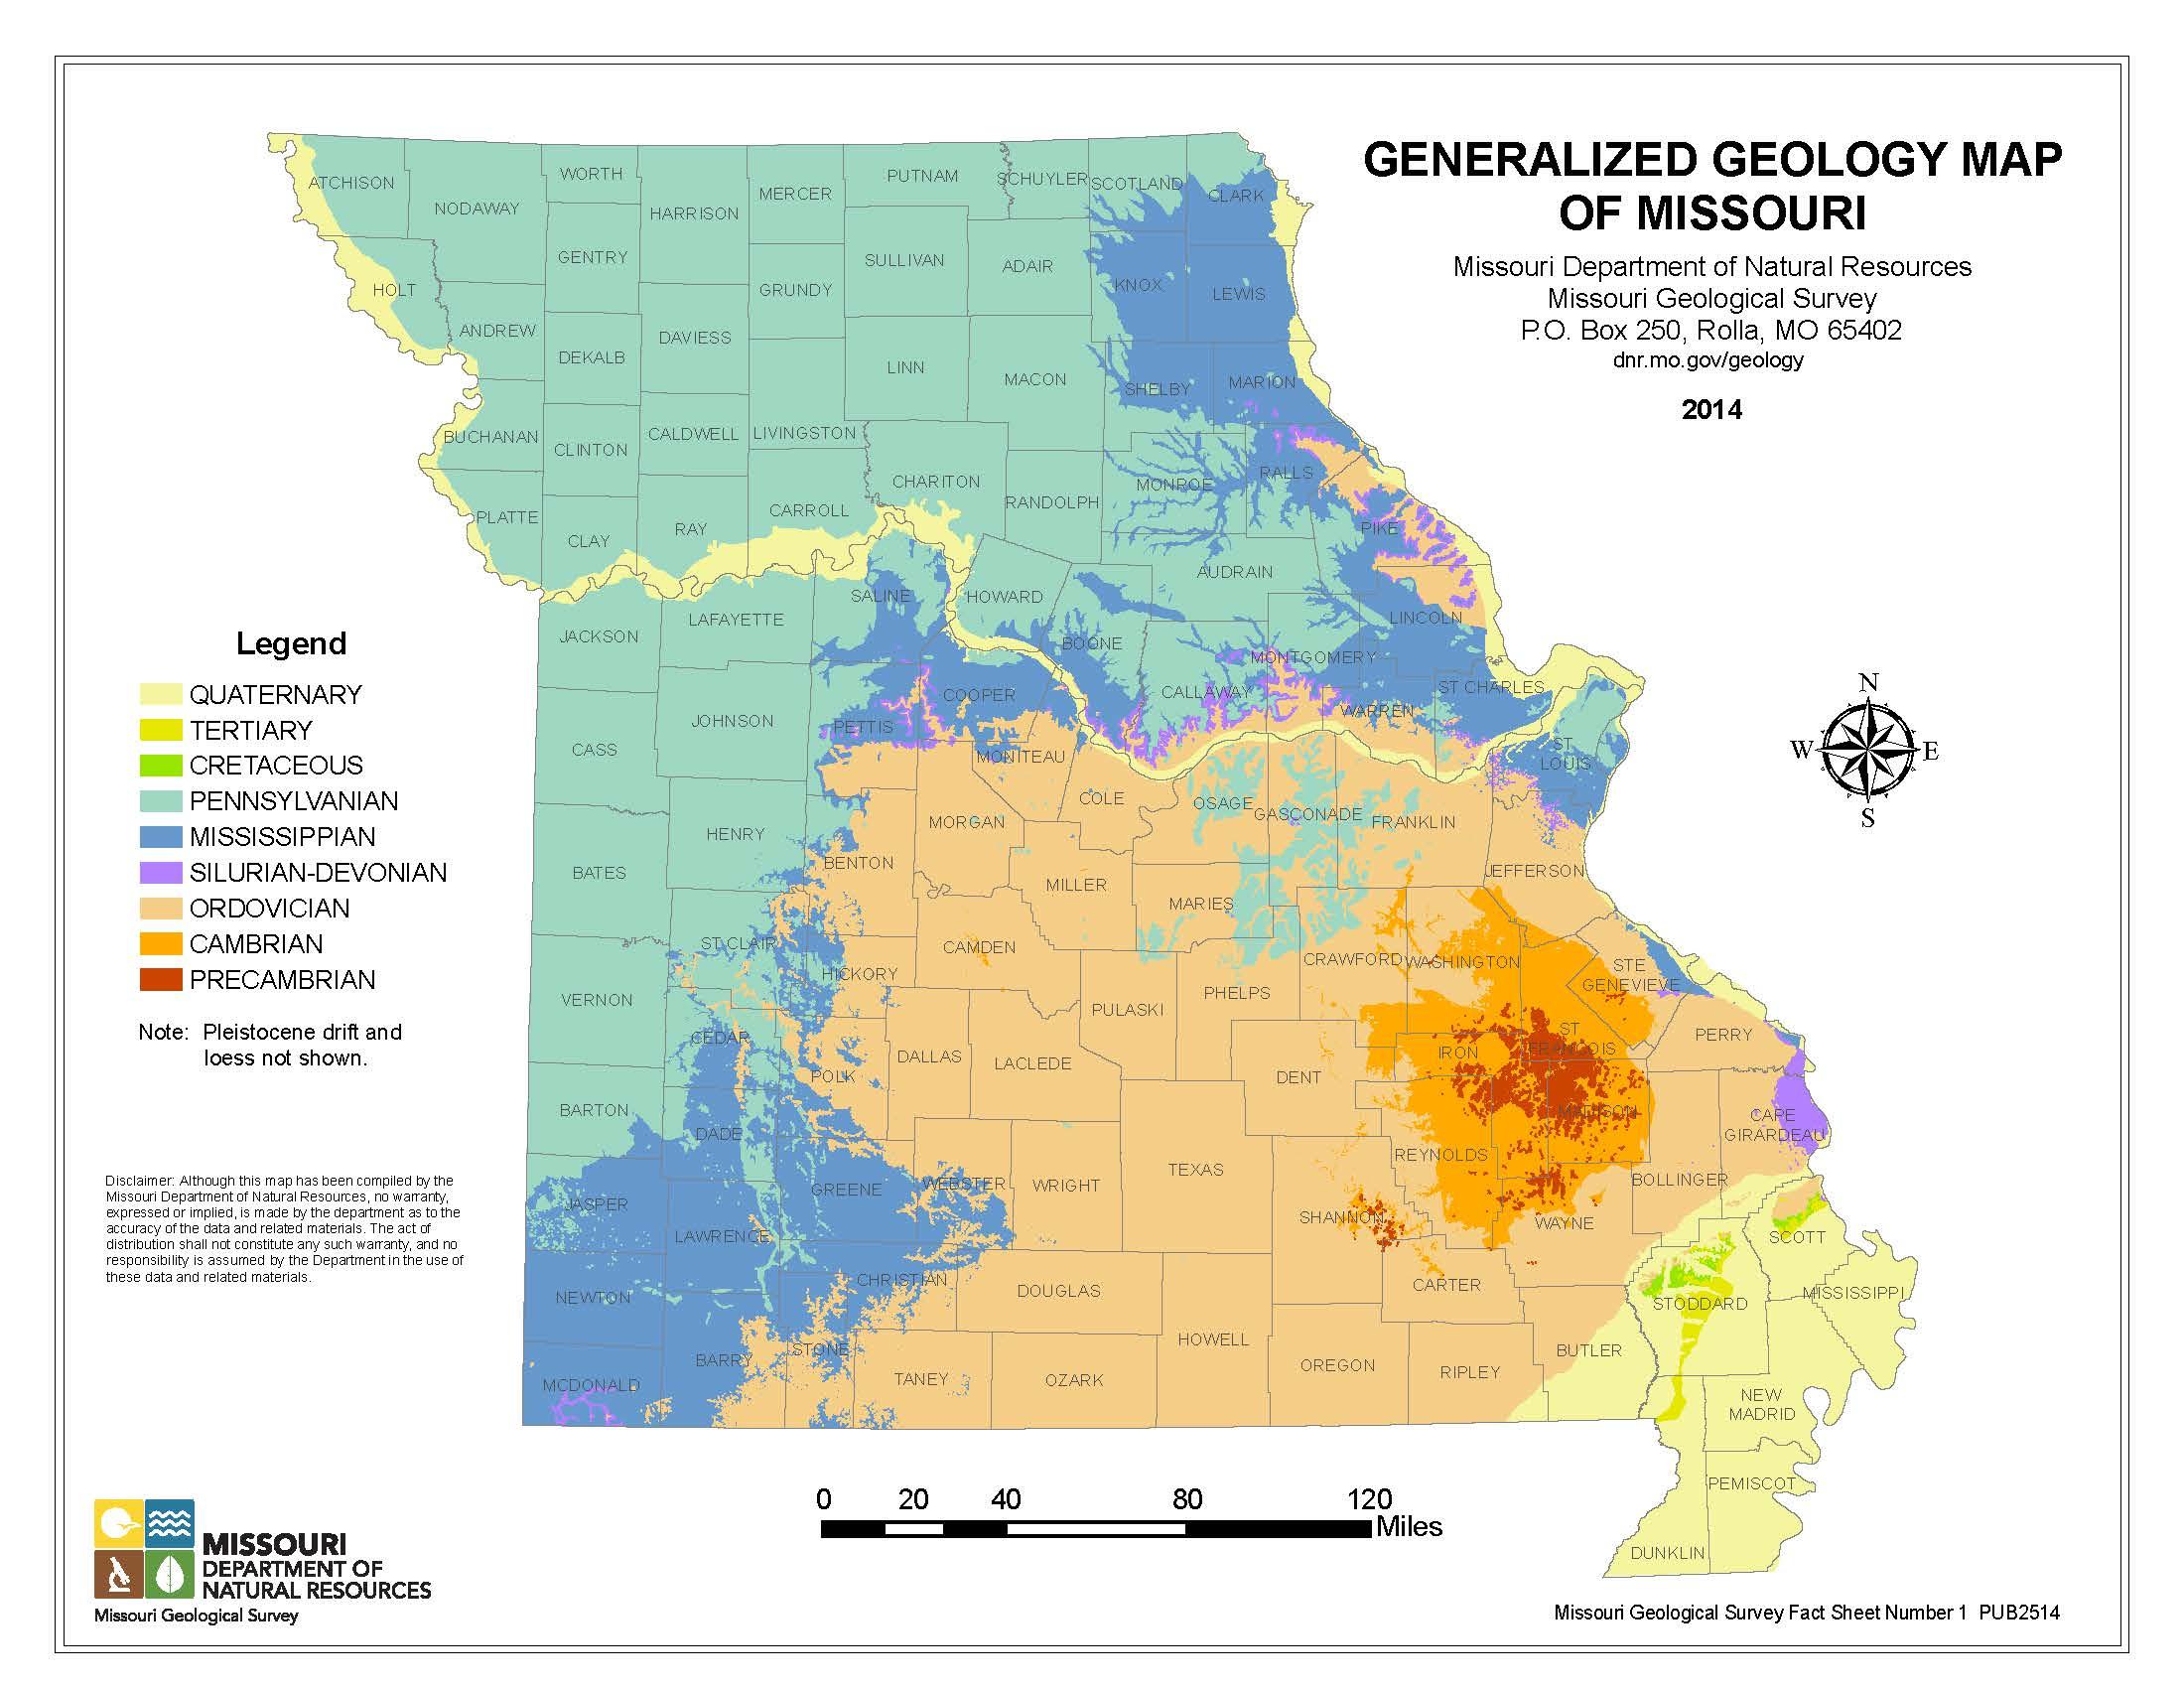 Generalized Geology Map of Missouri PUB2514